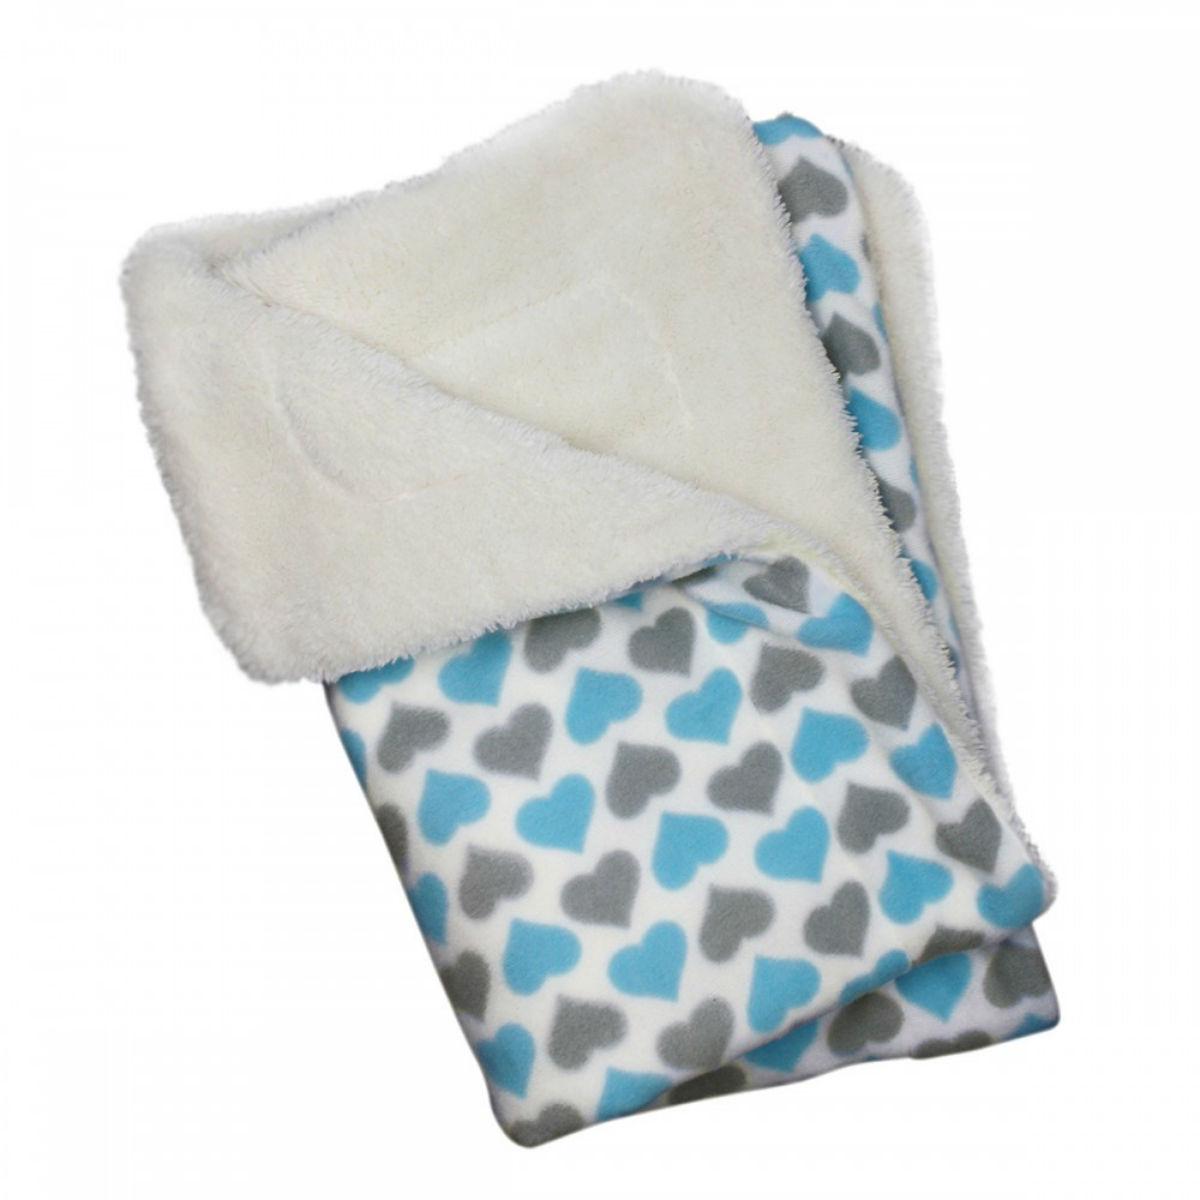 Klippo Hearts Ultra-Plush Dog Blanket - Blue and Gray